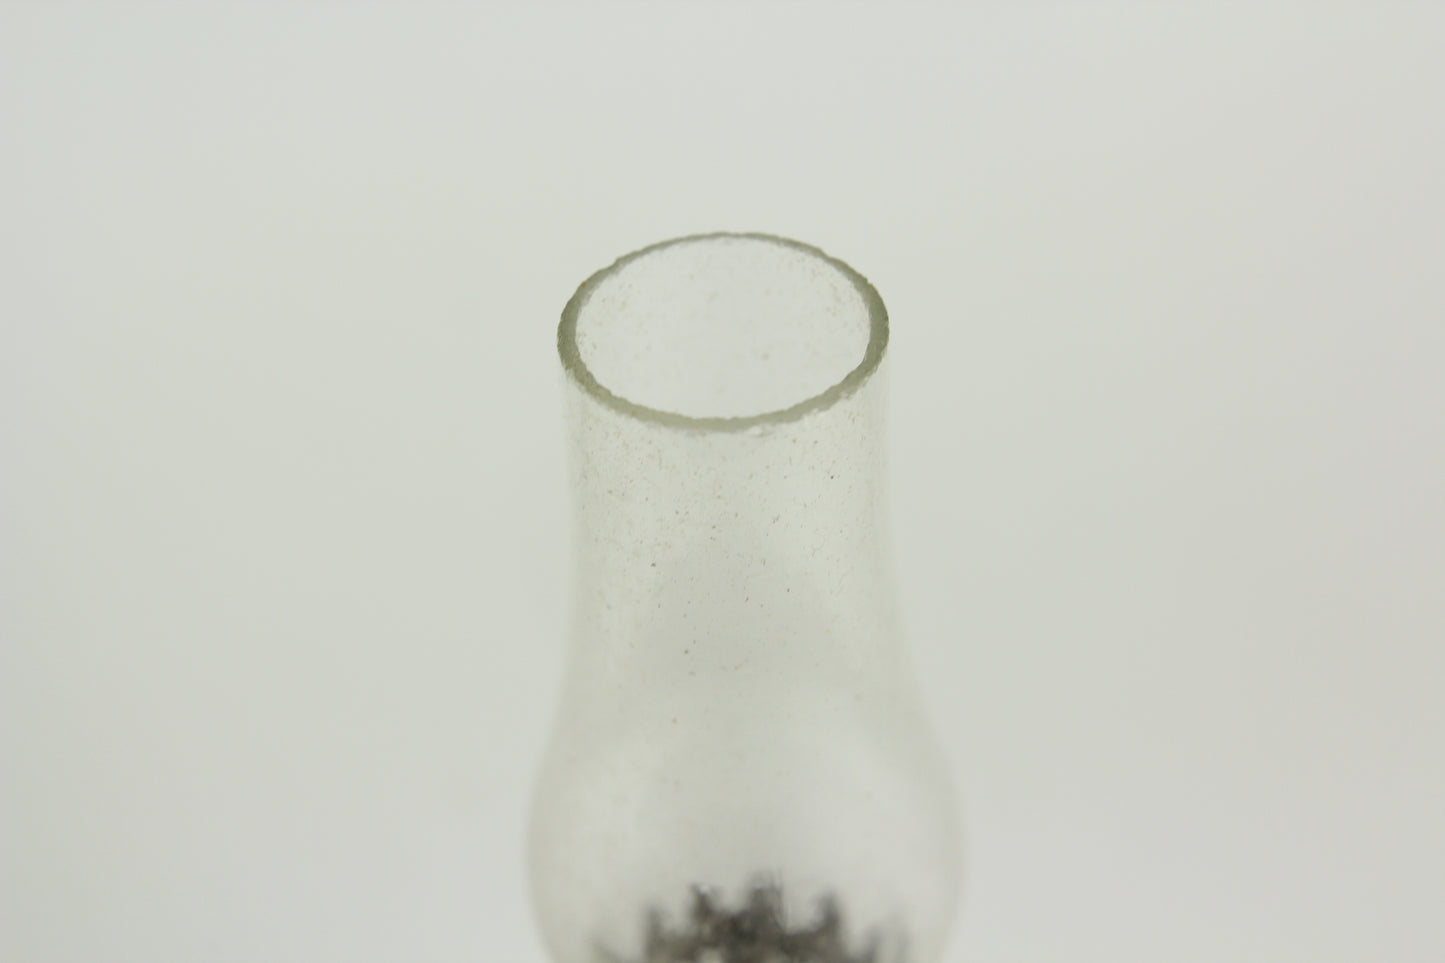 Hobnail Clear Glass Miniature Oil Kerosene Lamp with Chimney